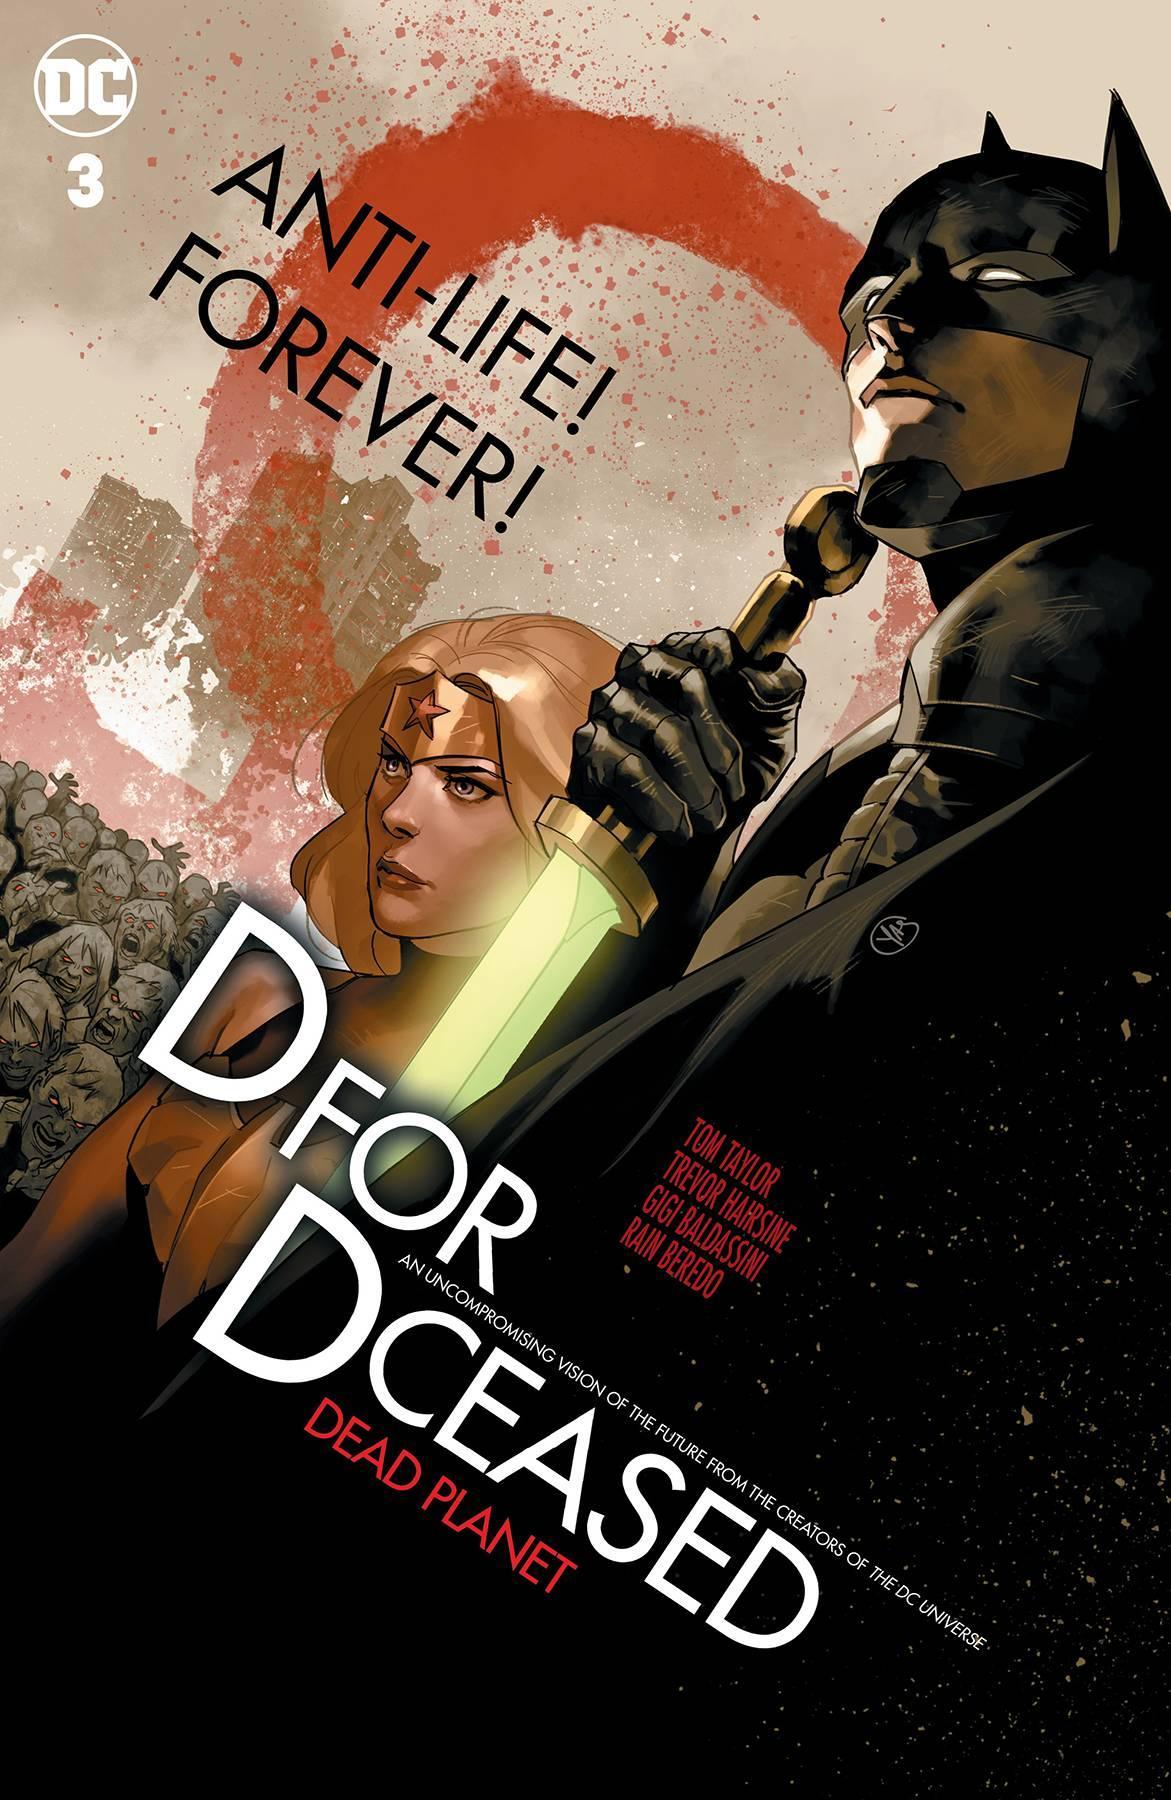 DCEASED DEAD PLANET #3 CARD STOCK BEN OLIVER MOVIE VAR ED - Kings Comics